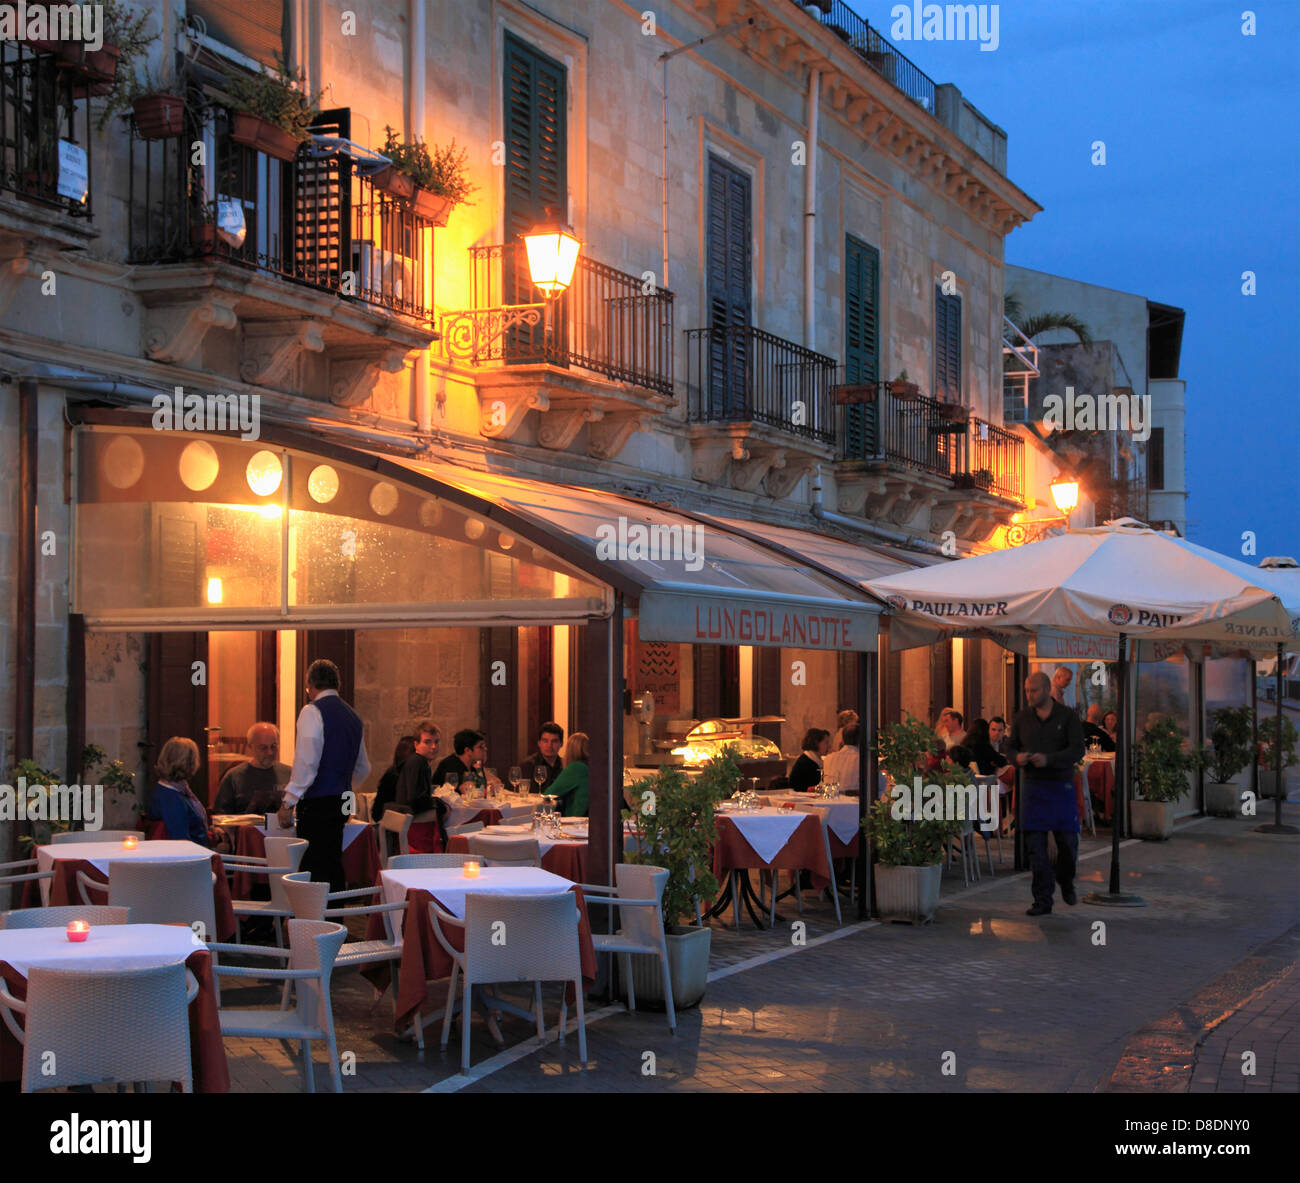 Italy, Sicily, Siracusa, restaurant, people, Stock Photo